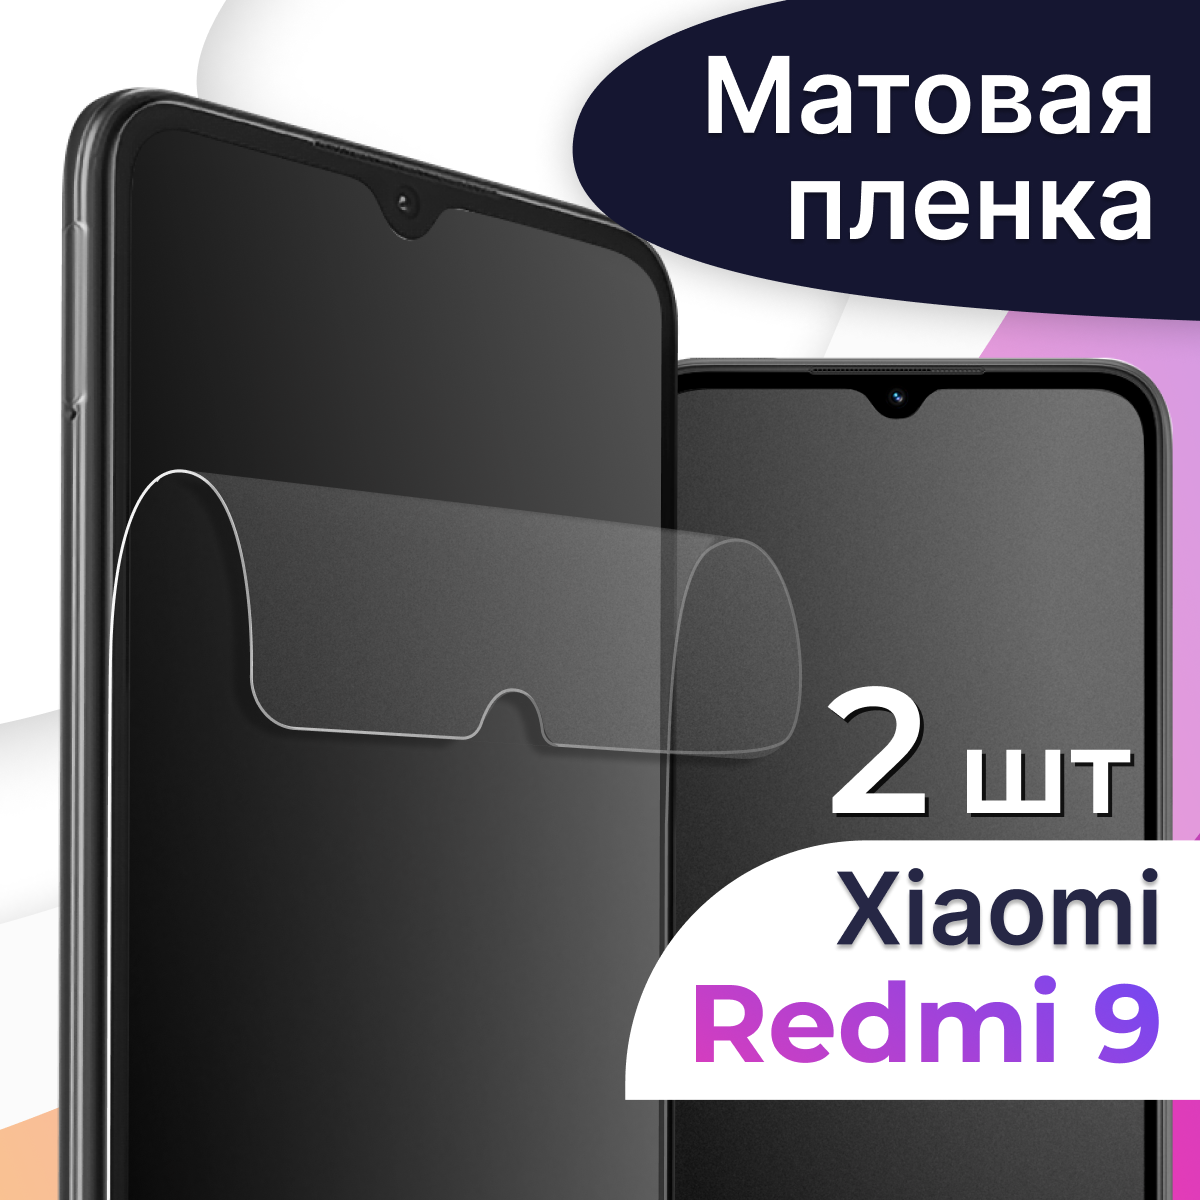 Матовая пленка на телефон Xiaomi Redmi 9 / Гидрогелевая противоударная пленка для смартфона Сяоми Редми 9 / Защитная самовосстанавливающаяся пленка